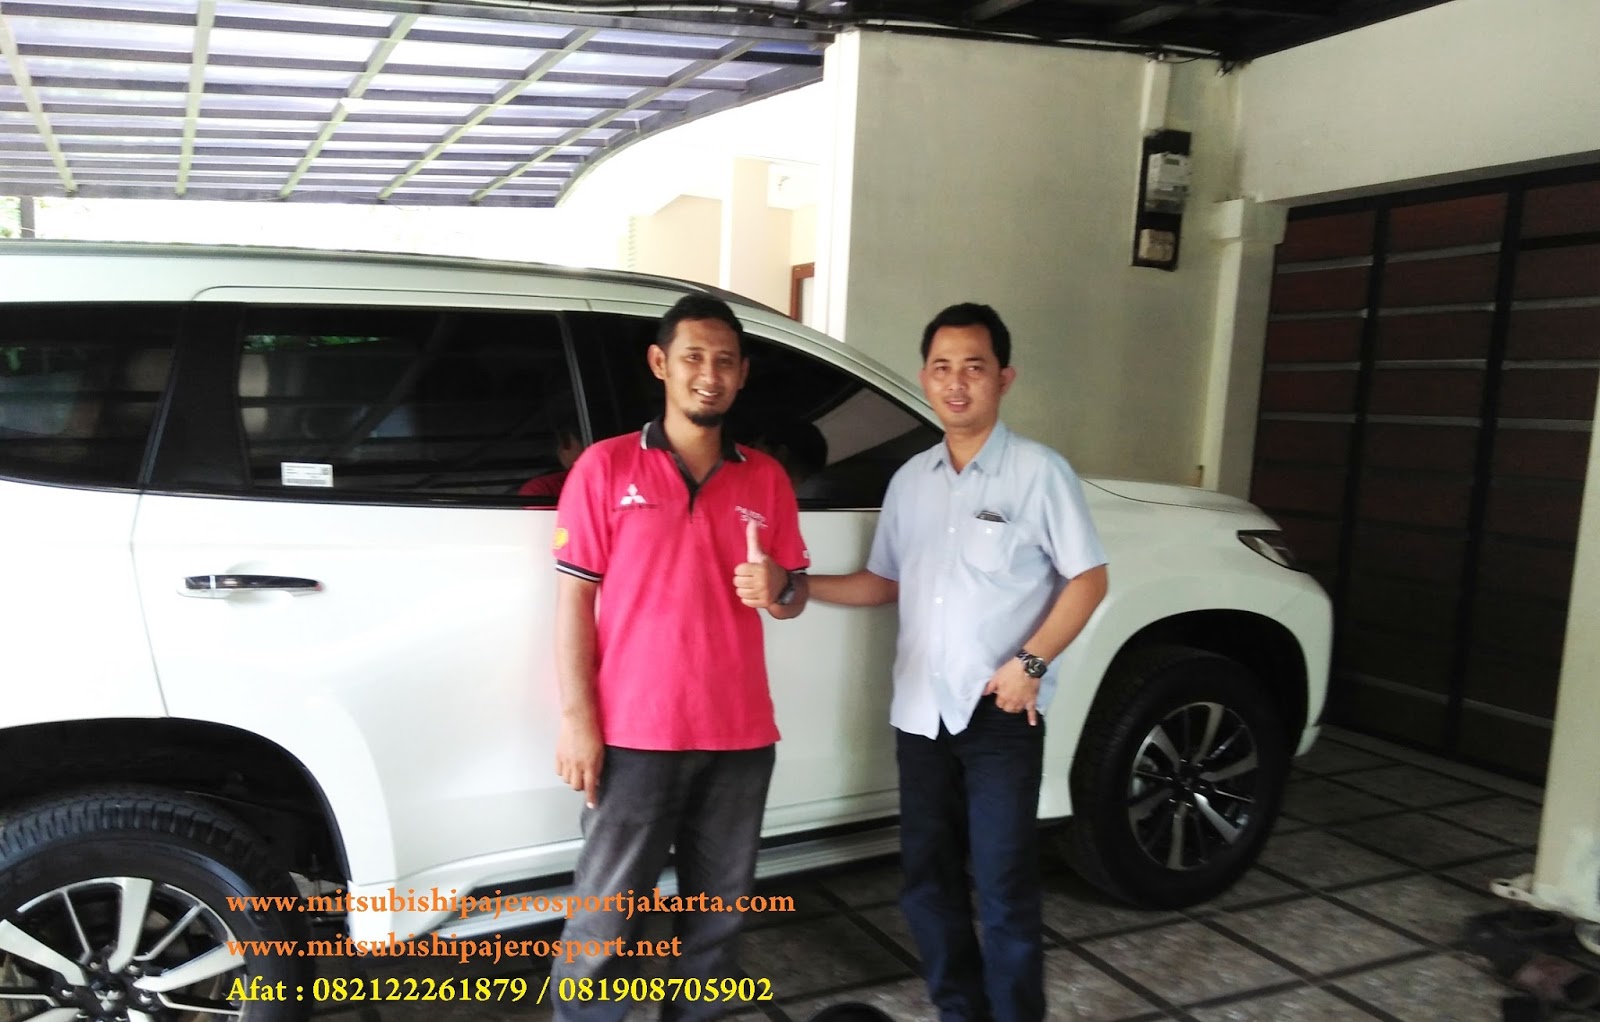 Dealer Resmi Mitsubishi Jakarta HARGA MITSUBISHI NEW PAJERO SPORT